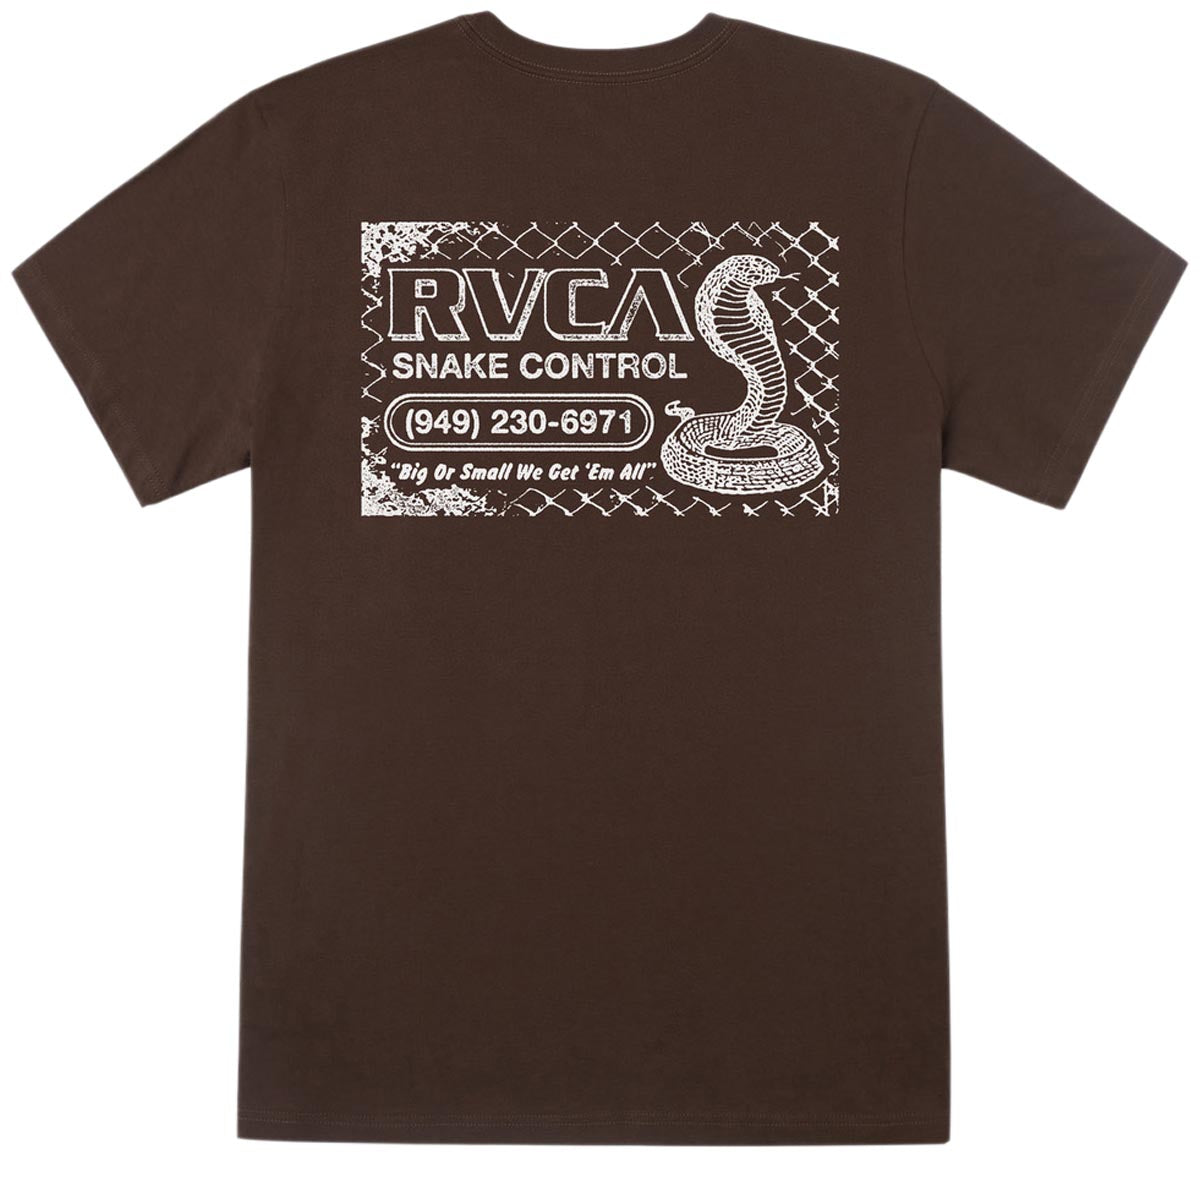 RVCA Snake Control T-Shirt - Chocolate image 1